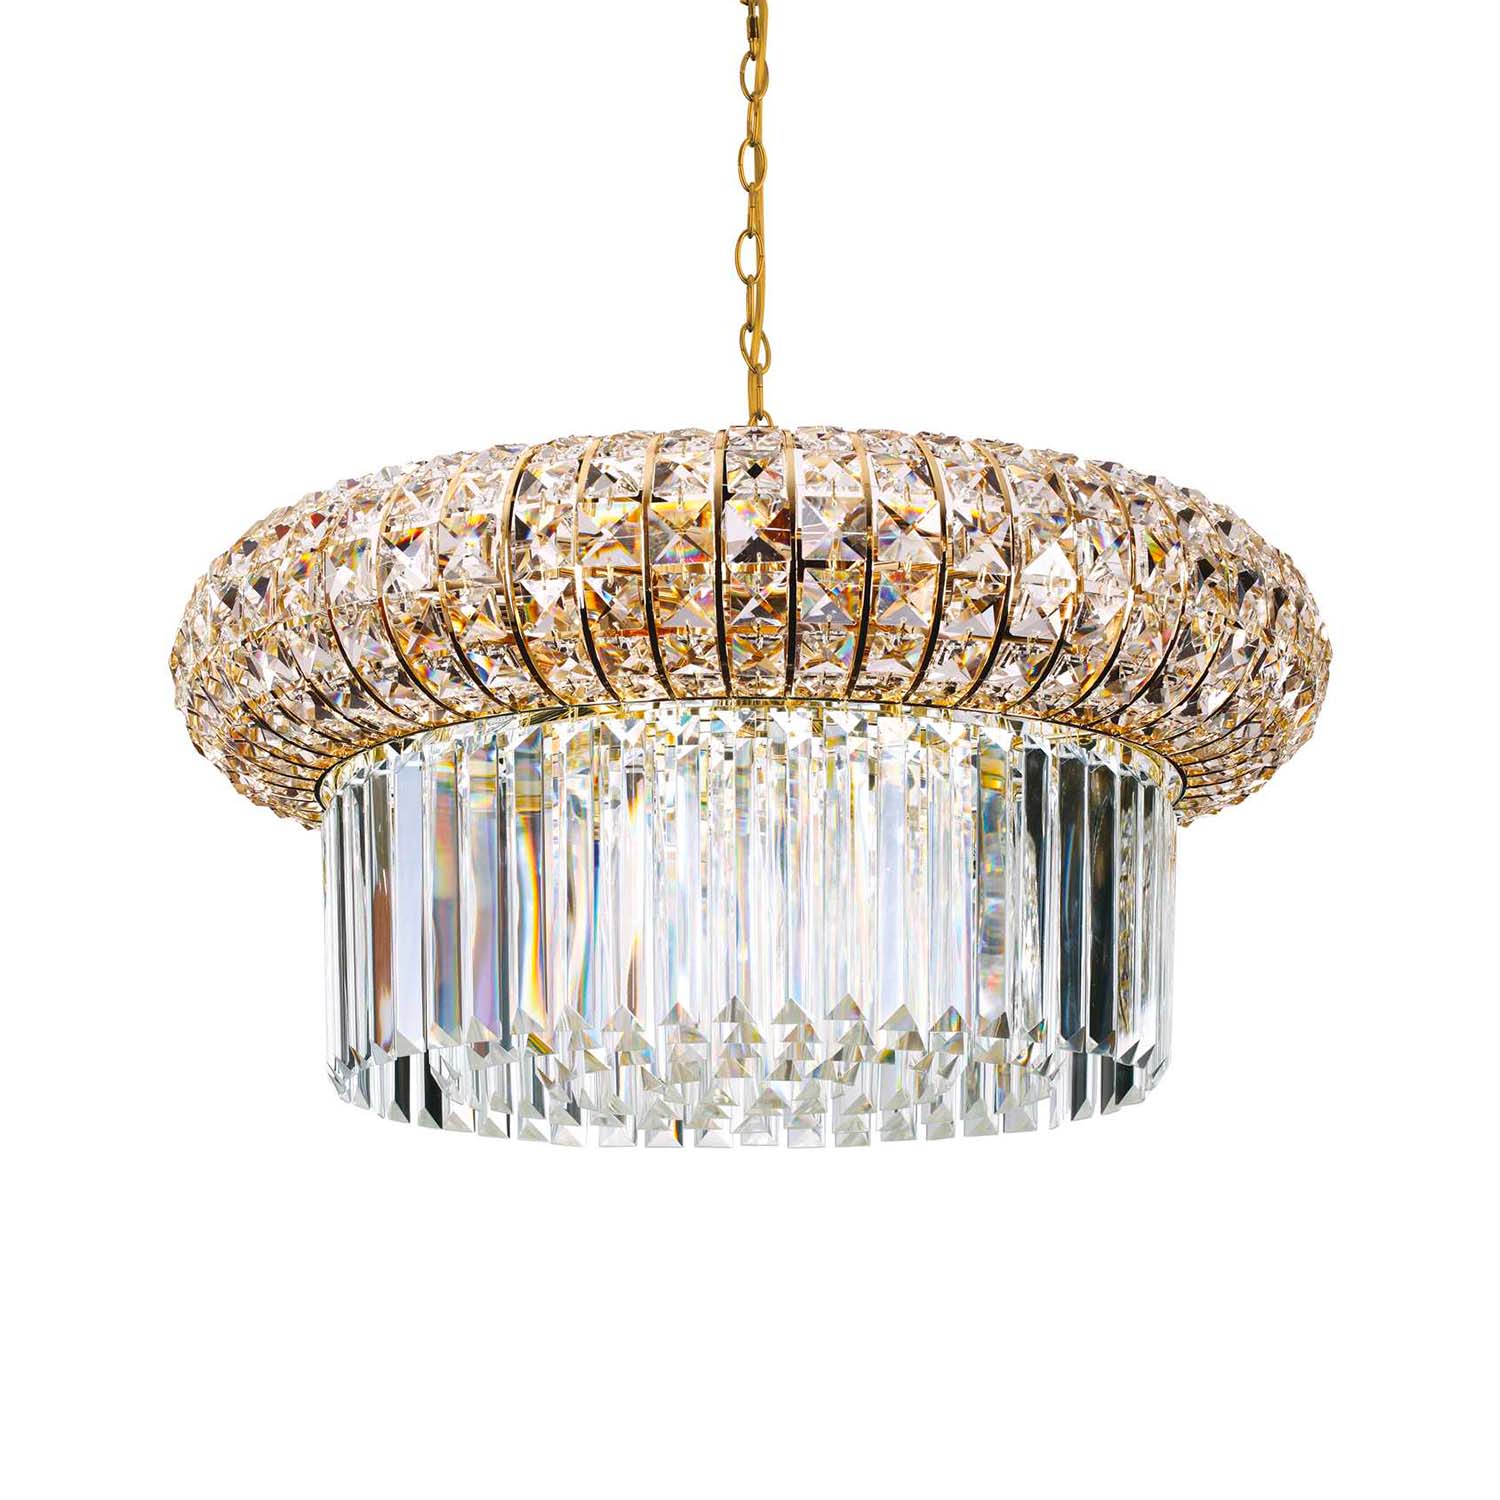 NABUCCO - Chic and elegant crystal chandelier